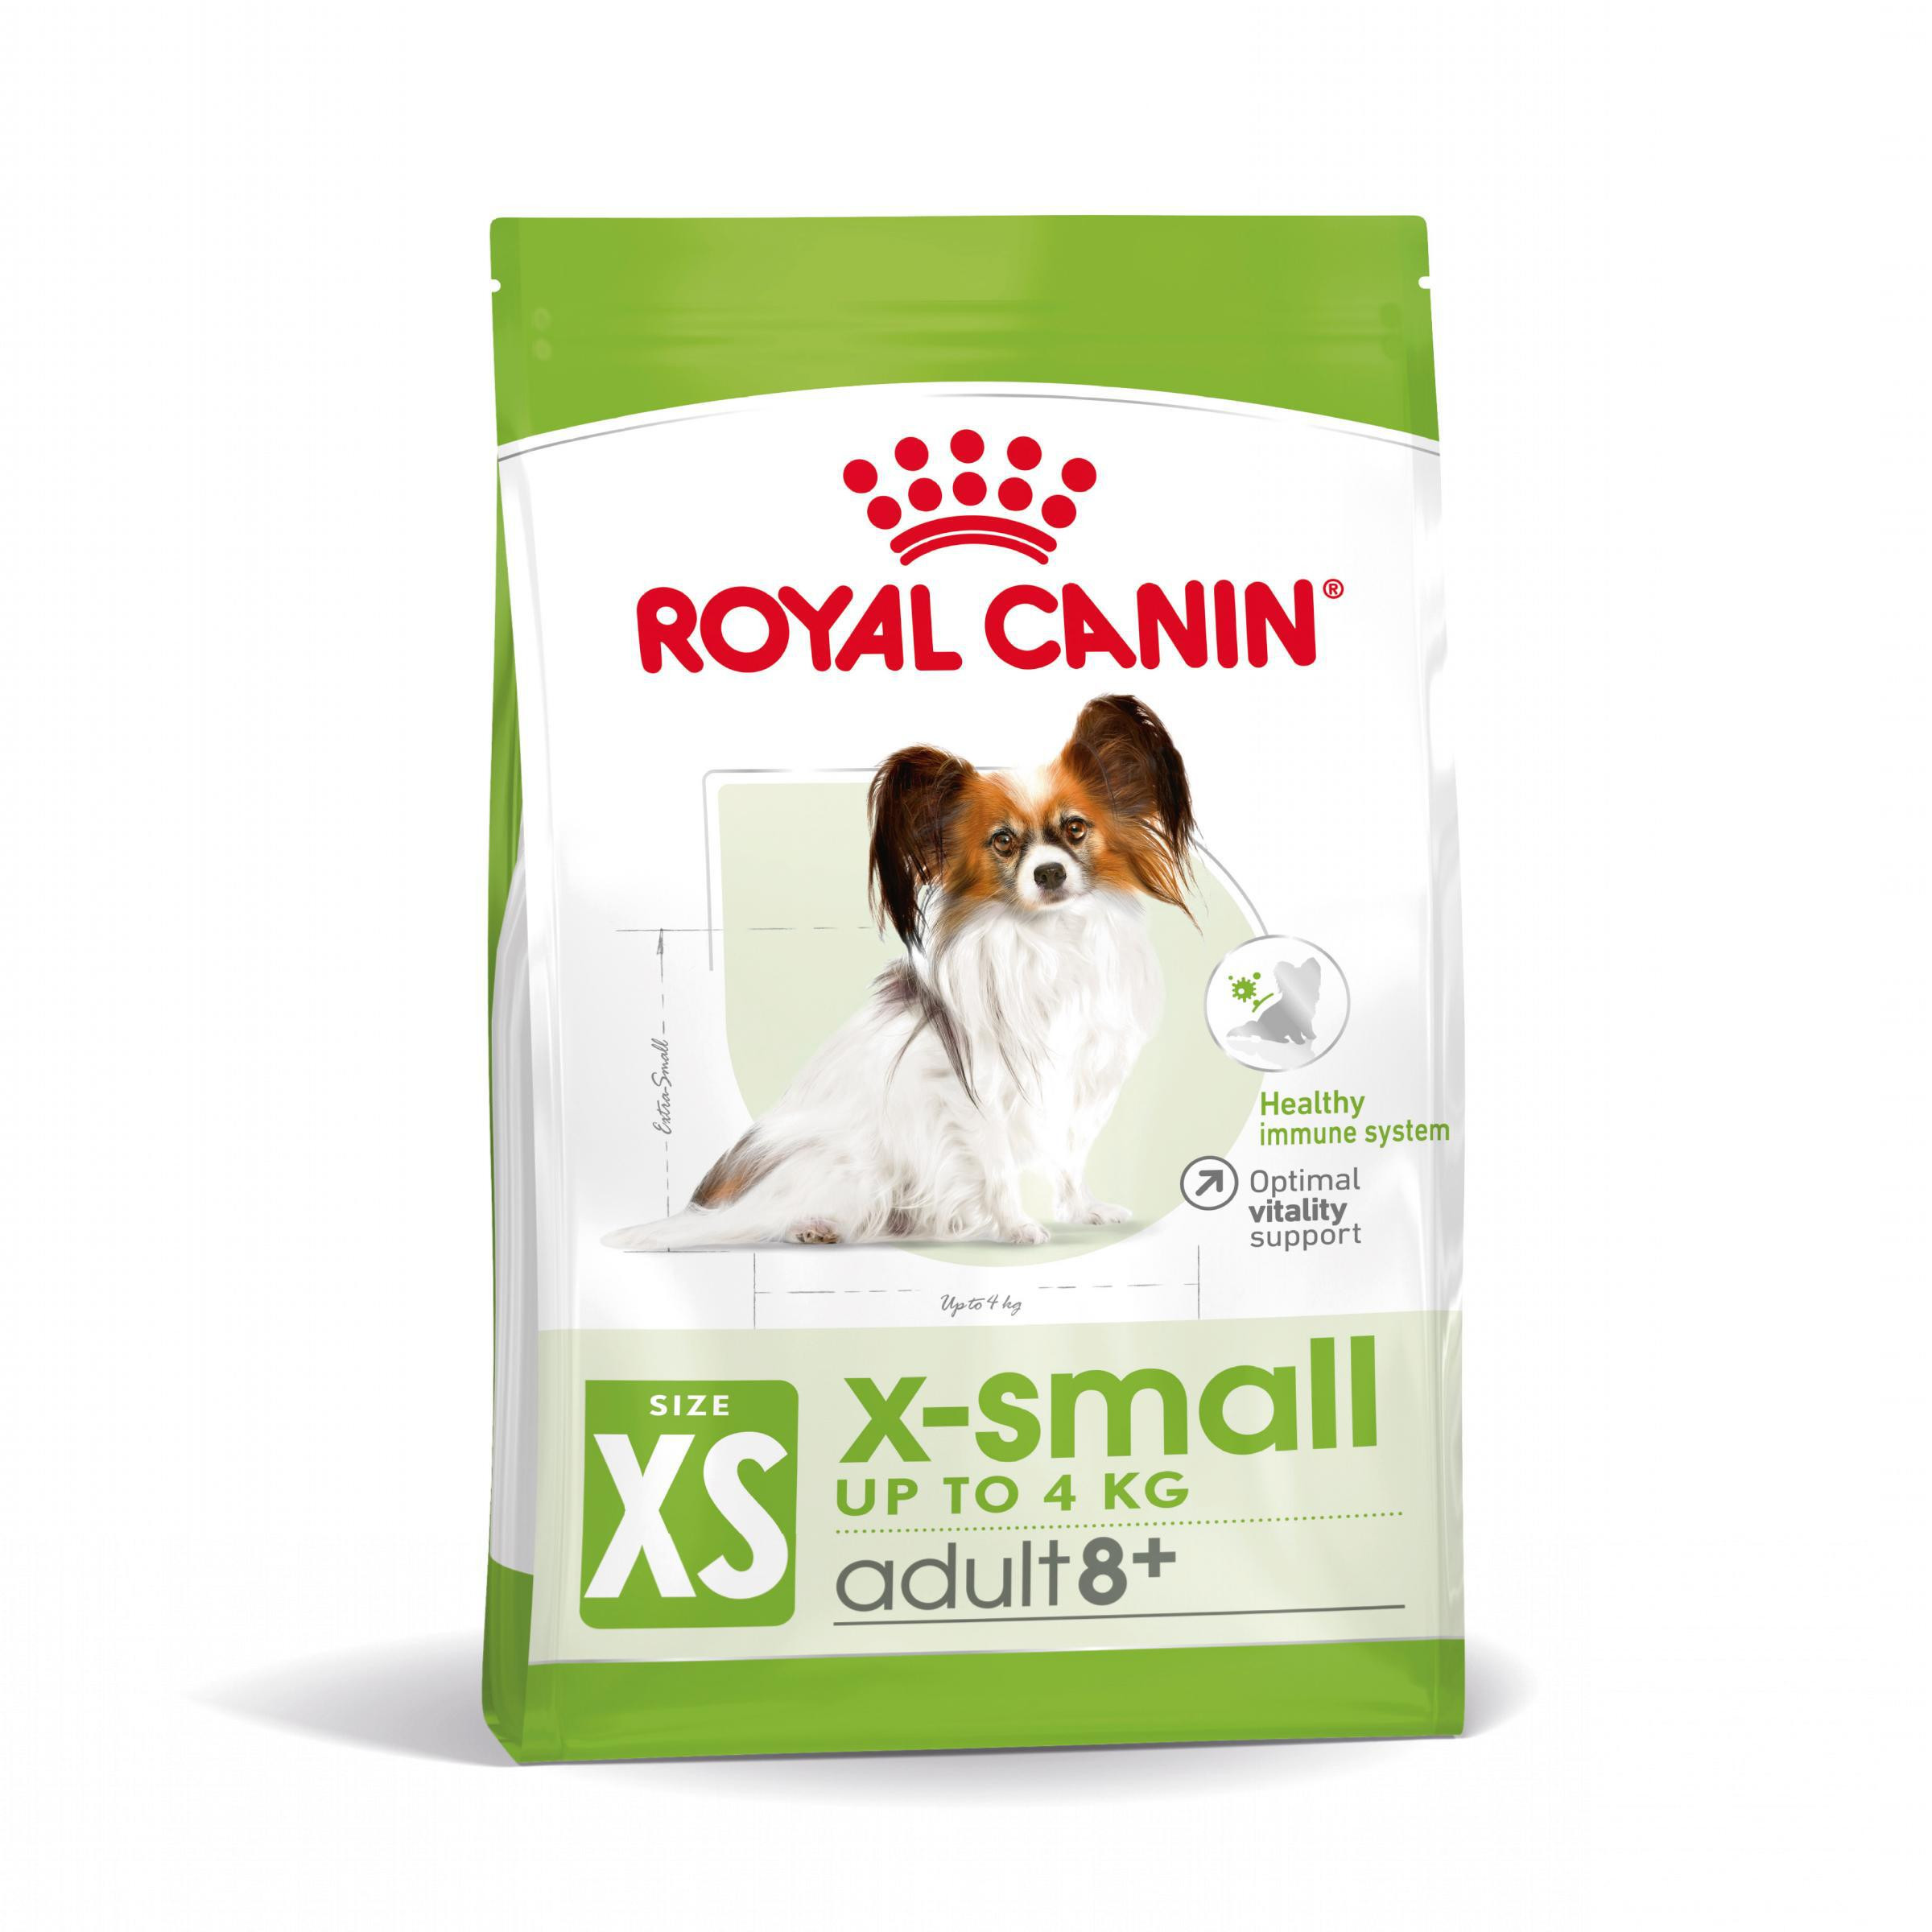 Bild von 2 x 3 kg Royal Canin X-Small Adult 8+ Hundefutter